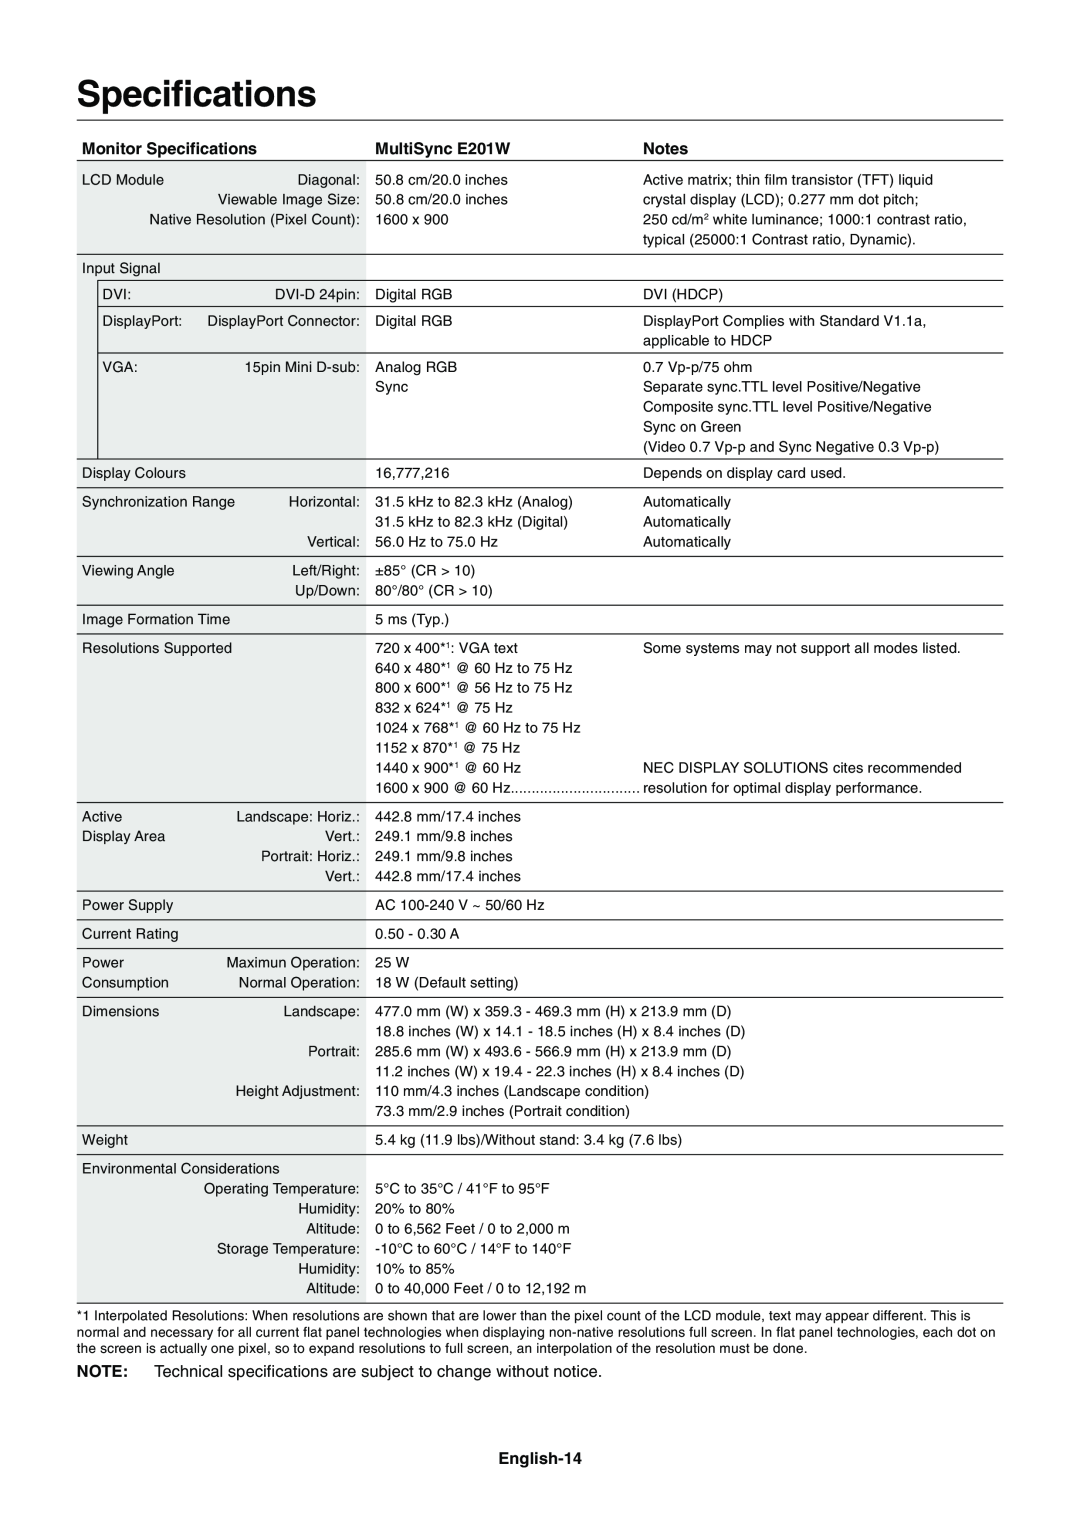 NEC user manual Monitor Specifications, MultiSync E201W, English-14 